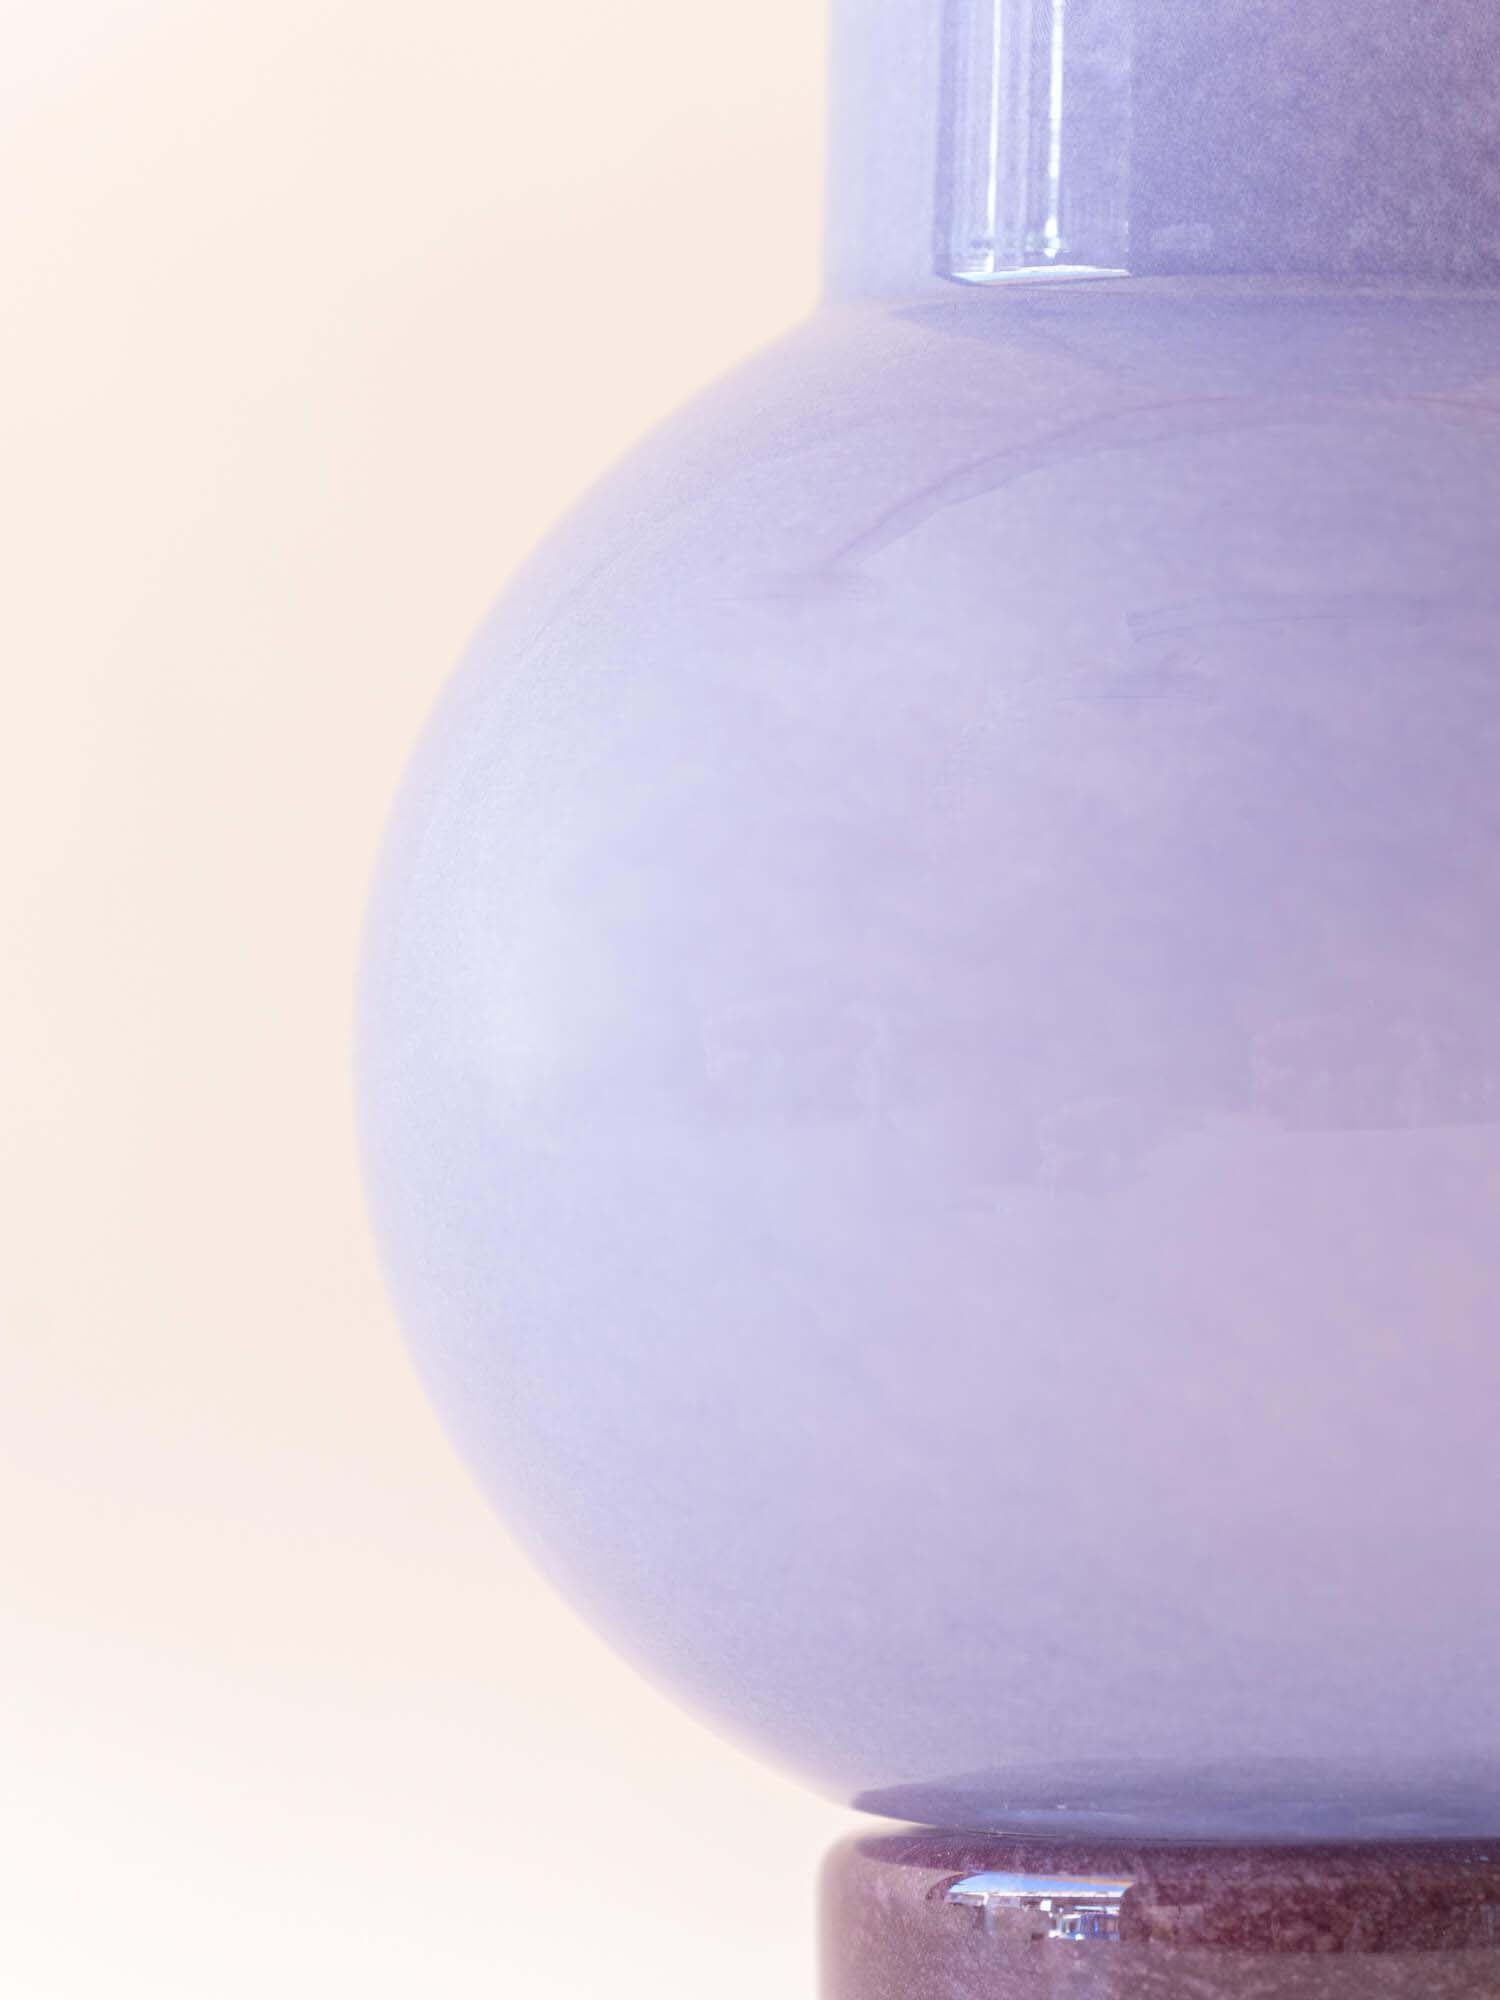 BROSTE COPENHAGEN Mouthblown Glass Vase Purple - Mari -